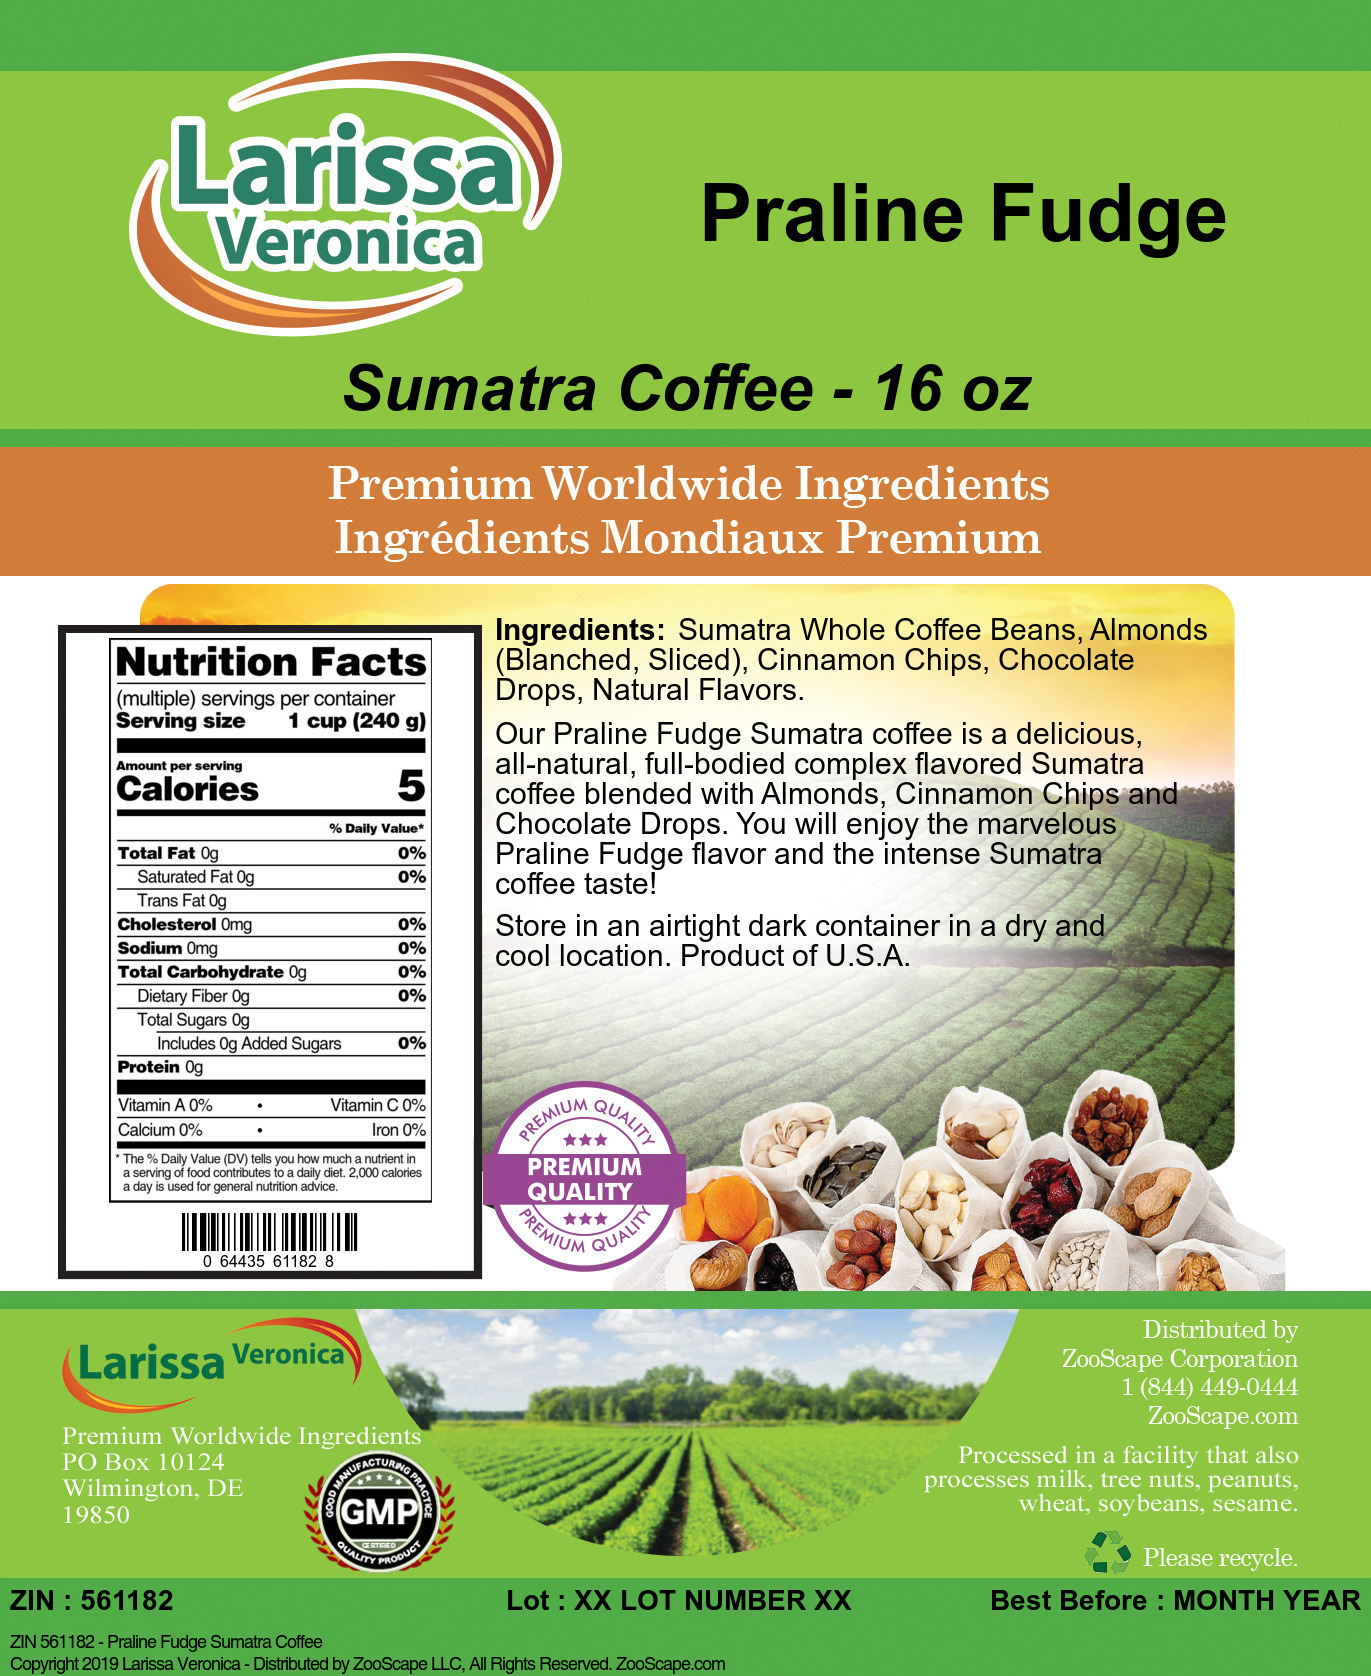 Praline Fudge Sumatra Coffee - Label